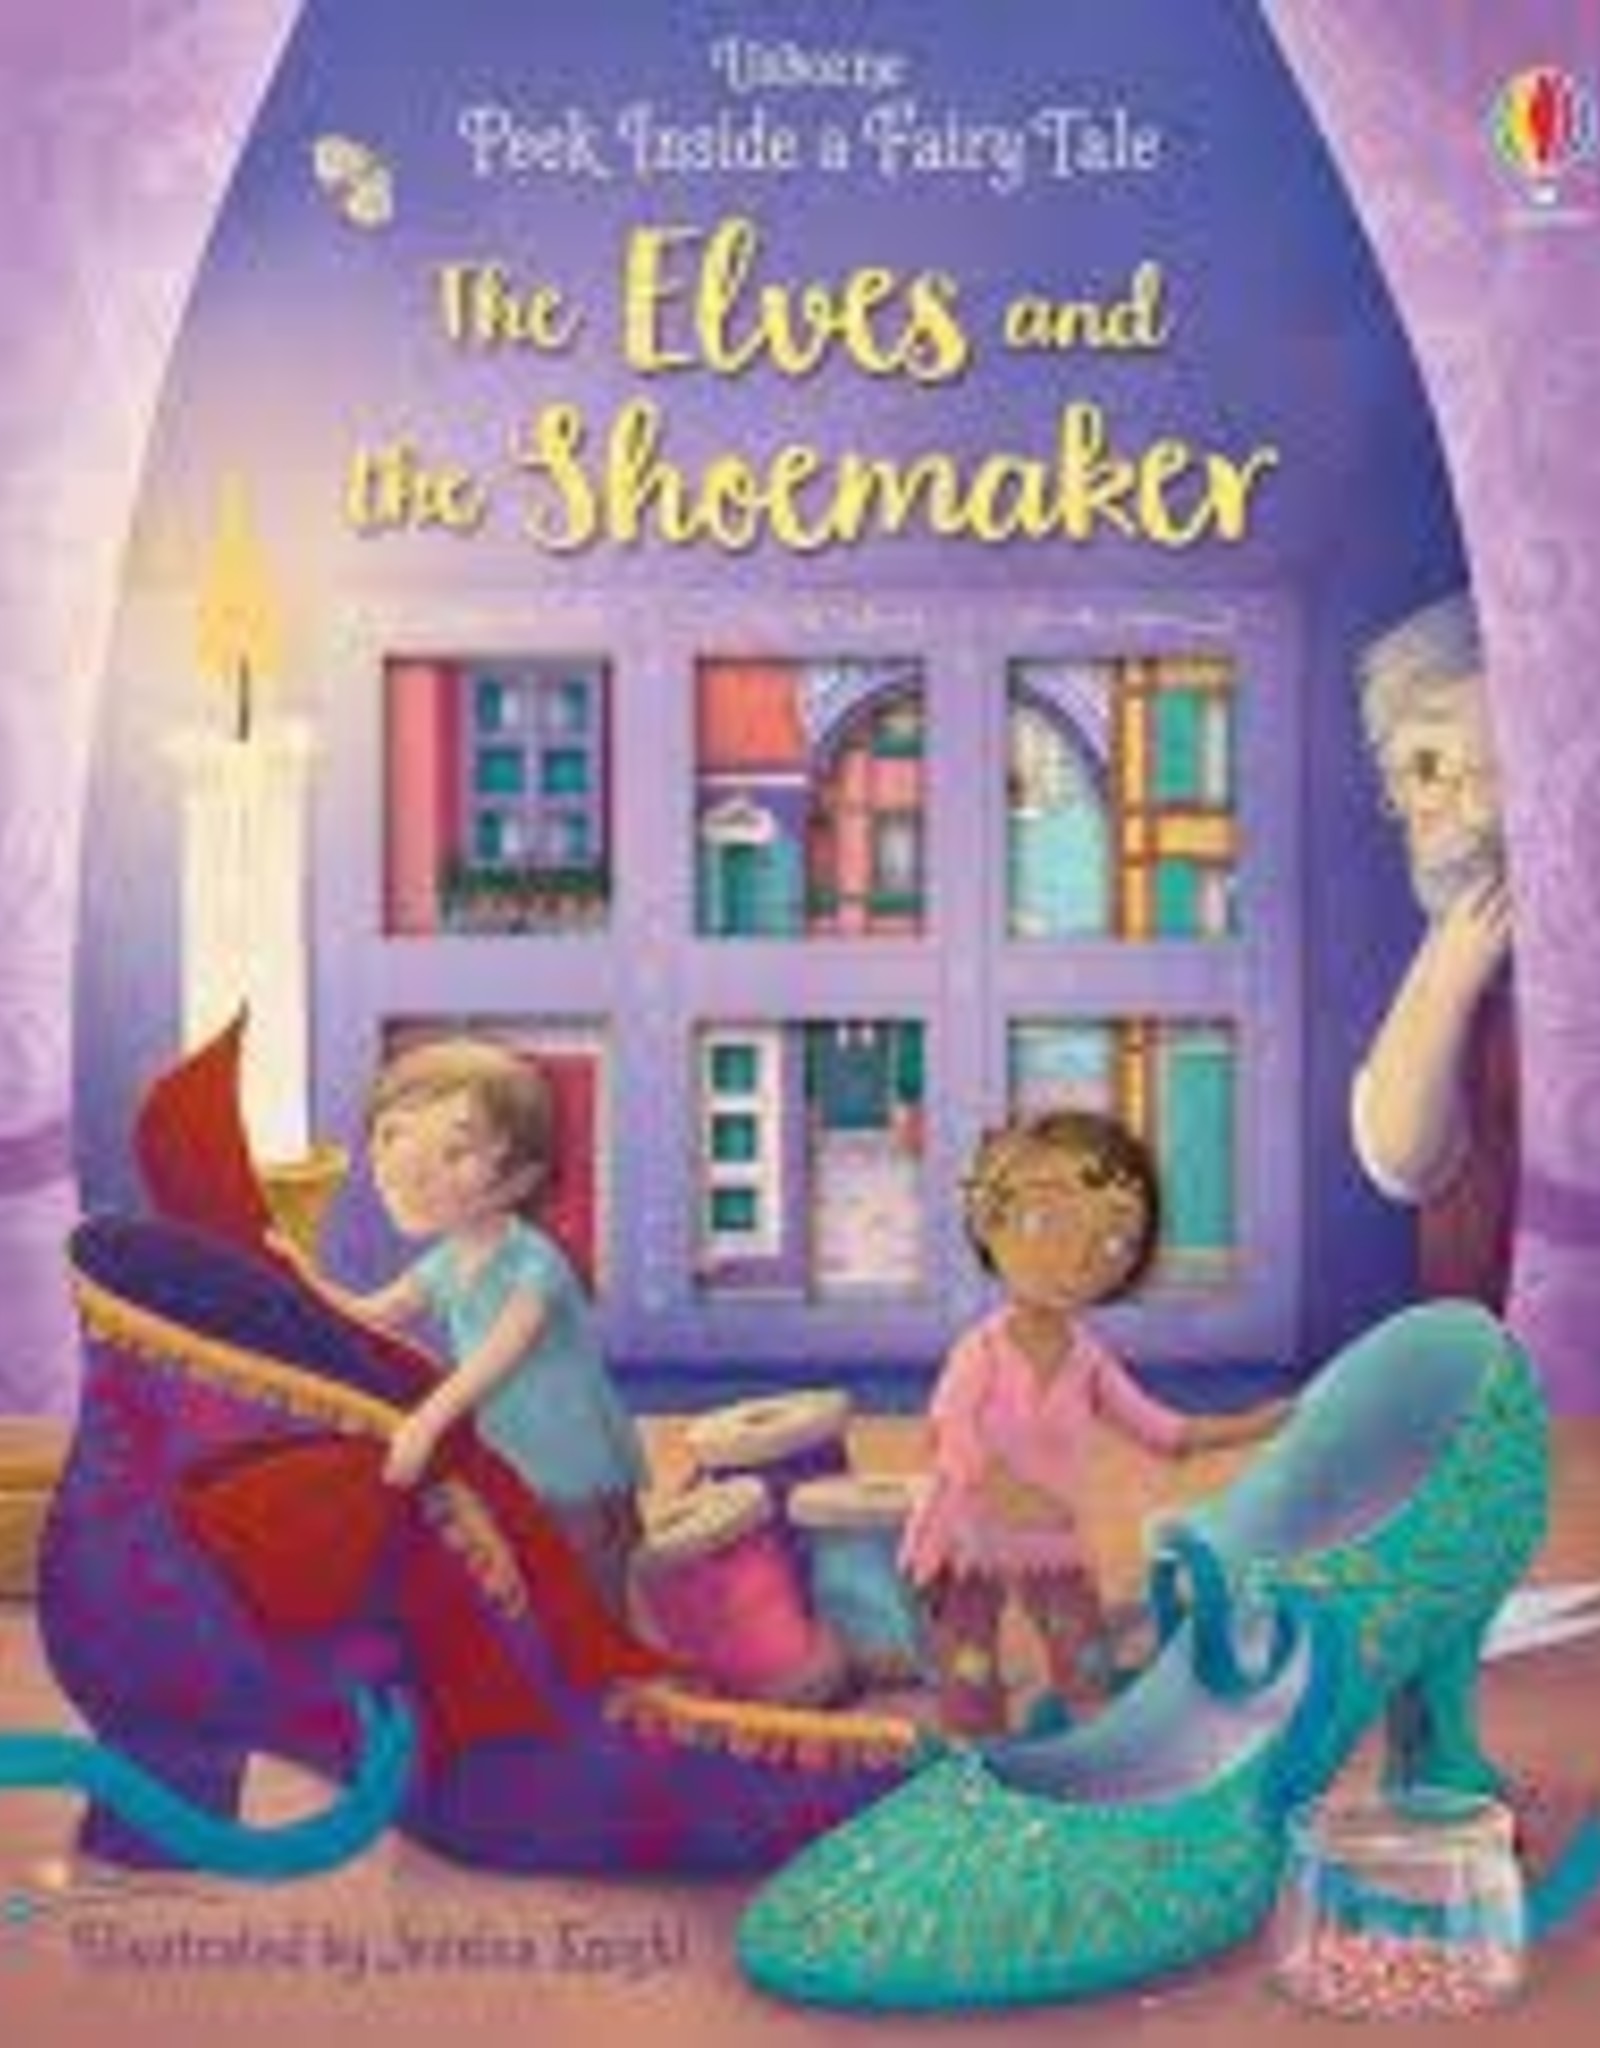 EDC USBORNE KANE MILLER Peek Inside a Fairy Tale: Elves and the Shoemaker,!!!!